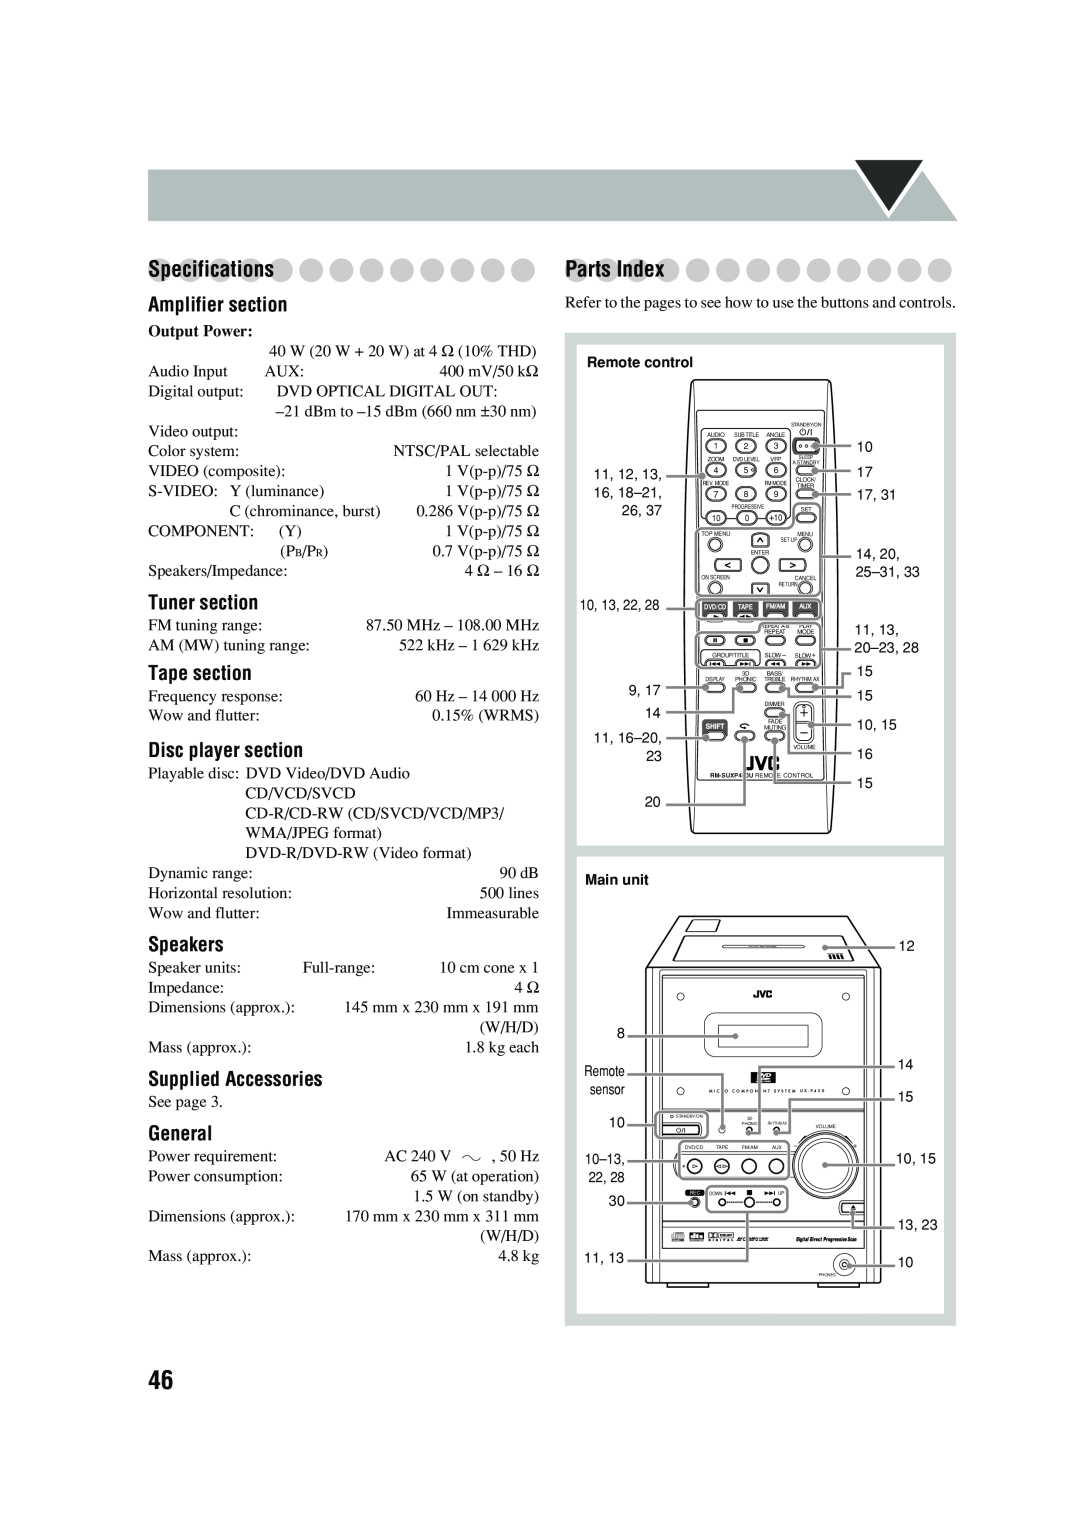 JVC UX-P450 Specifications, Parts Index, Amplifier section, Tuner section, Tape section, Disc player section, Speakers 